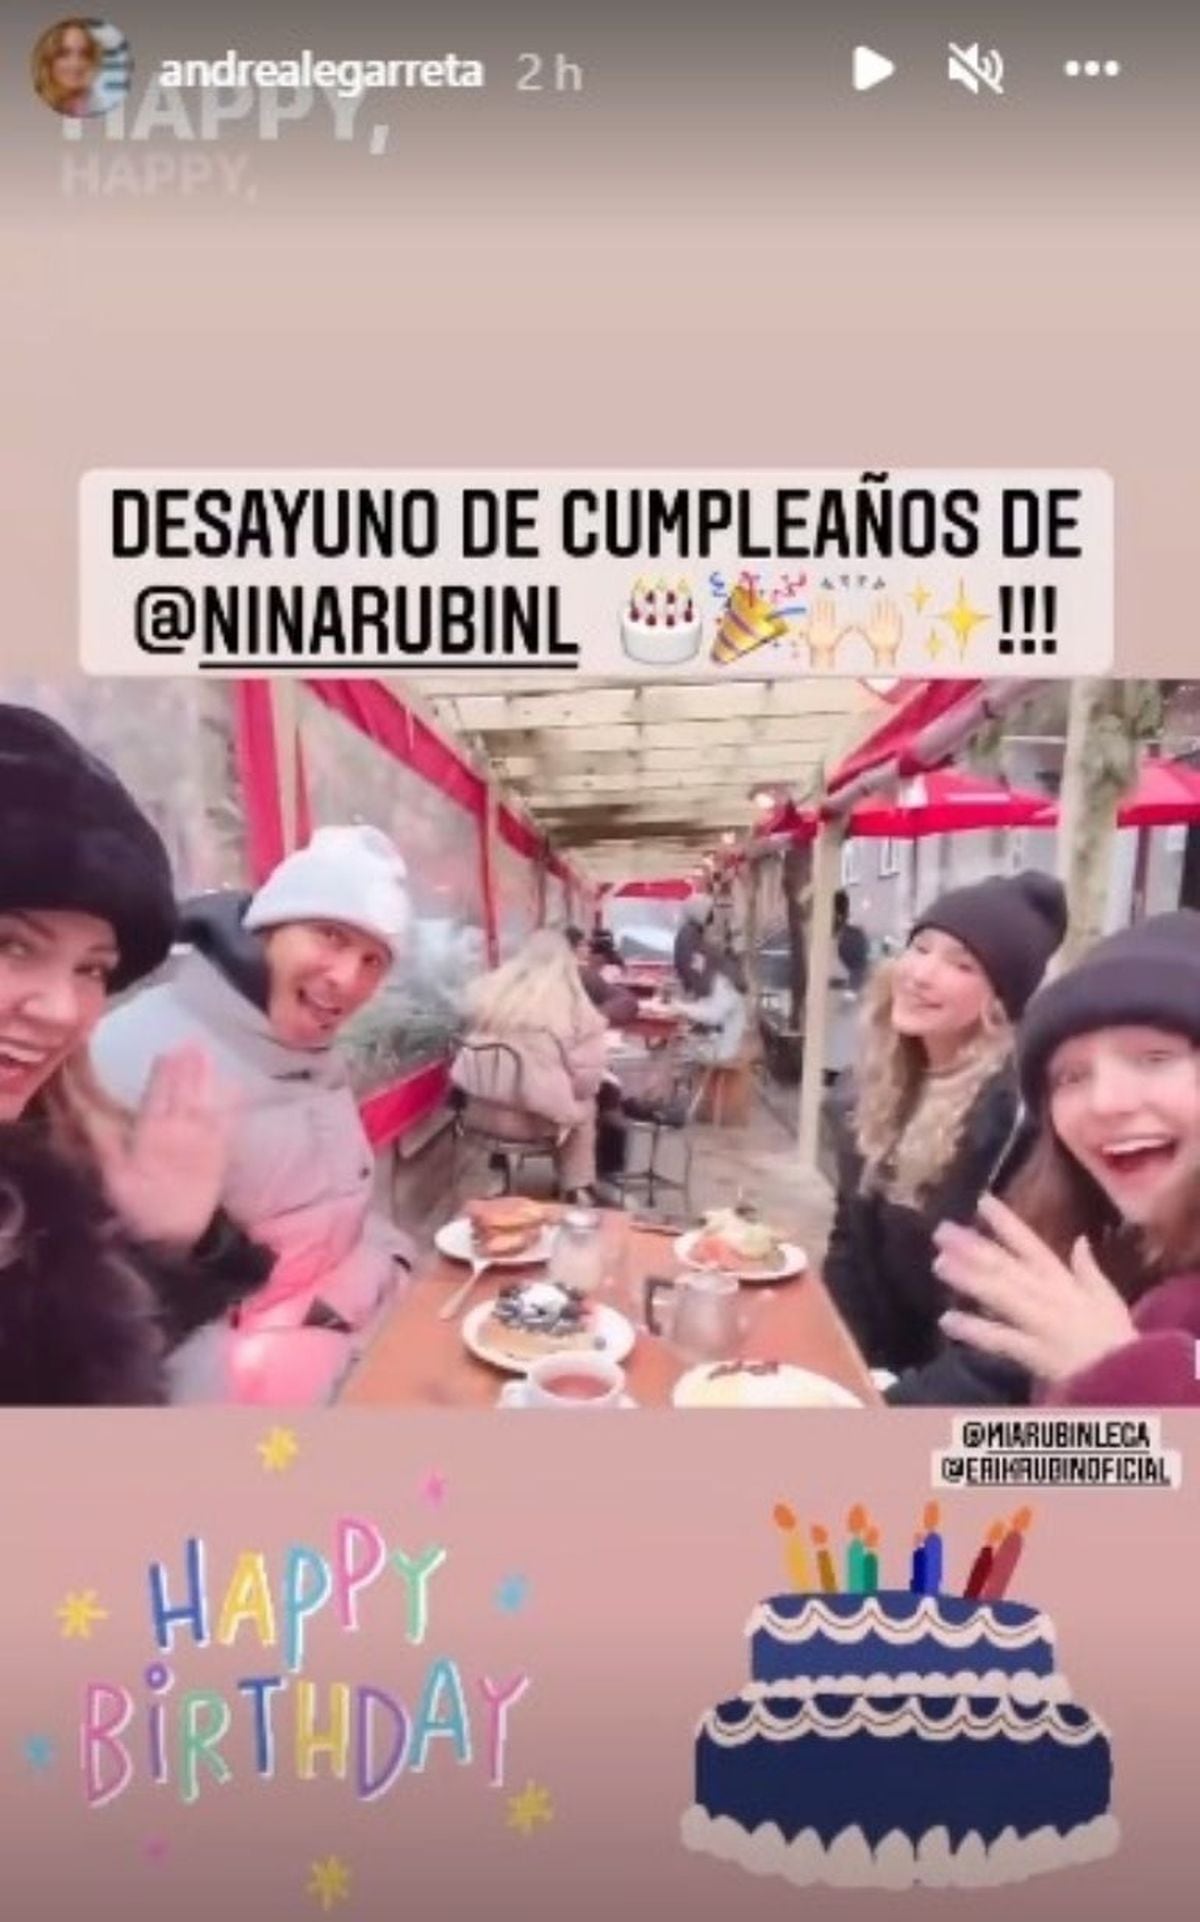 Nina Rubín celebrating her birthday early with a delicious breakfast (Photo: Andrea Legarreta / Instagram)